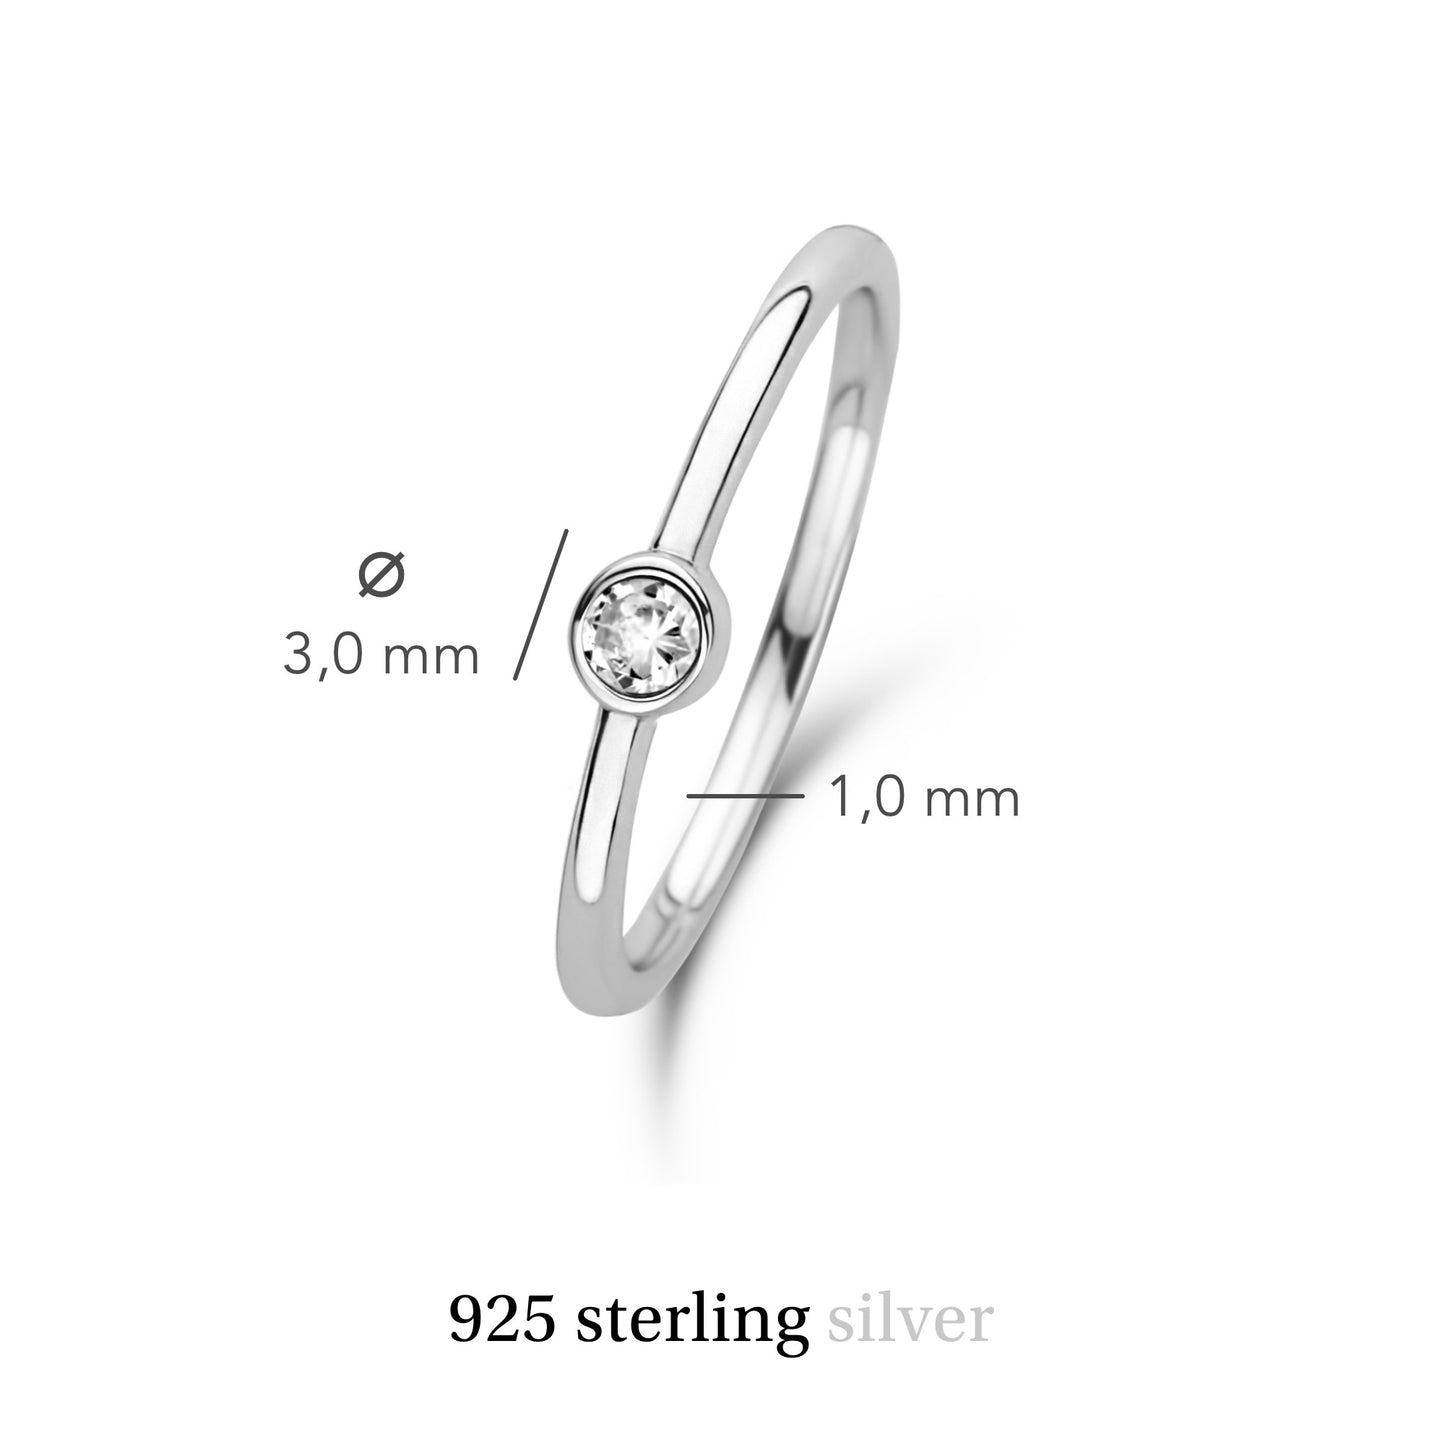 Venus 925 sterling silver ring with birthstone (56)